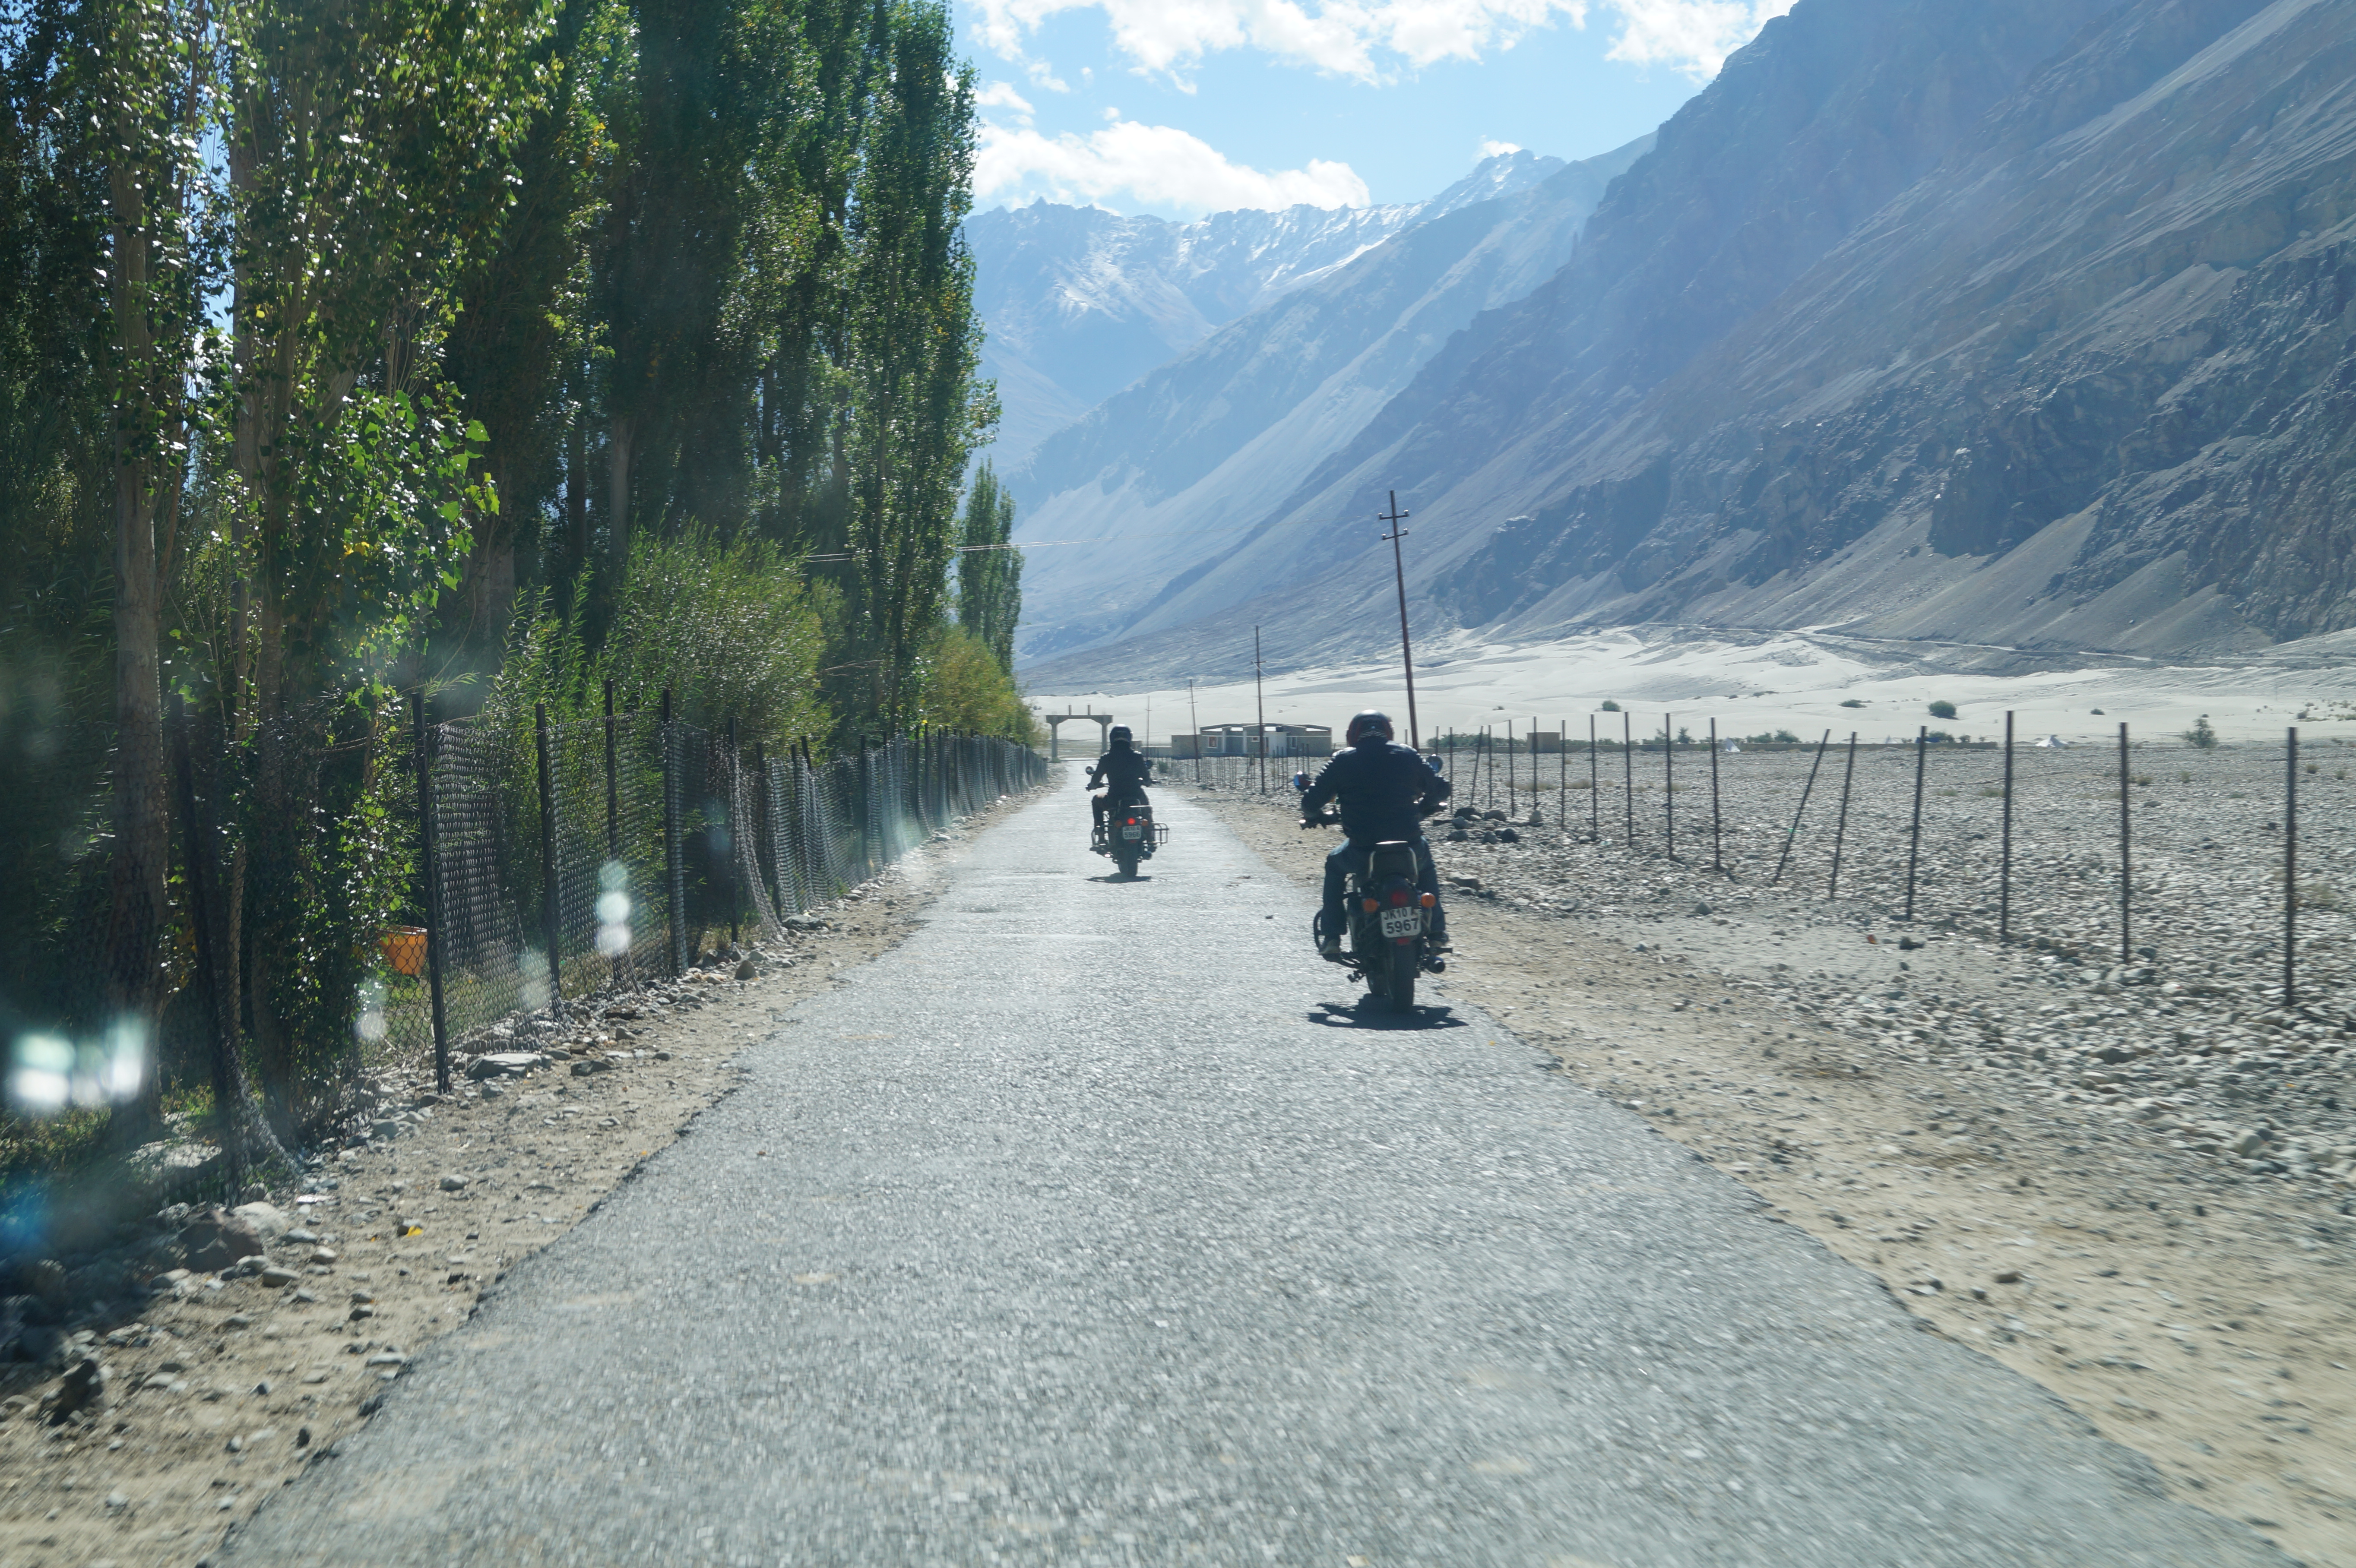 Leh Ladakh Bike Trip Cost